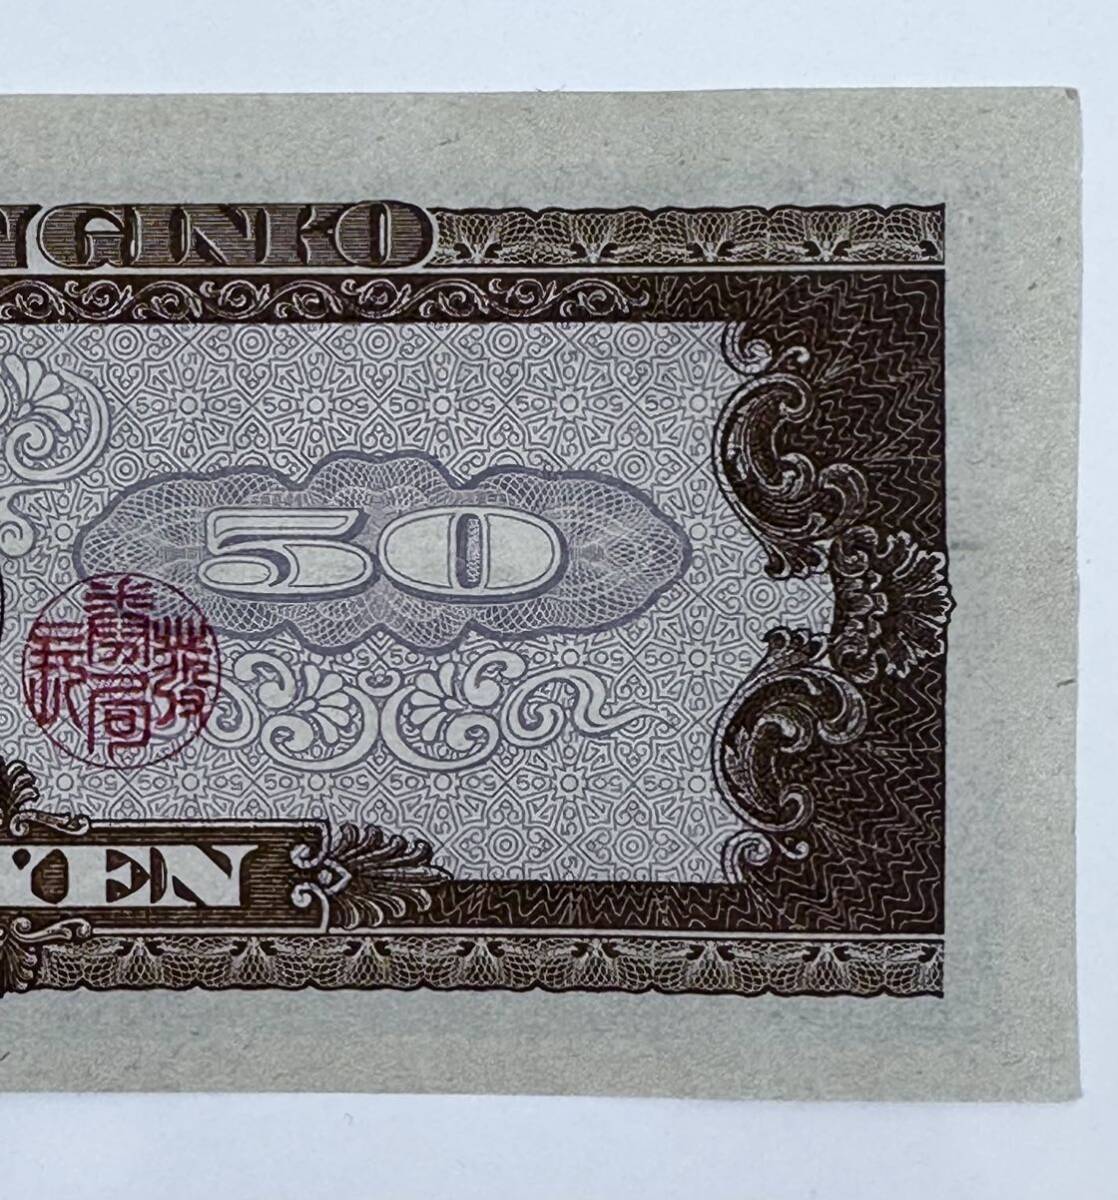 1 jpy ~ * Japan Bank ticket .. jpy .[ height .. Kiyoshi ]S707340U / note . 10 jpy . old note / folding eyes none 